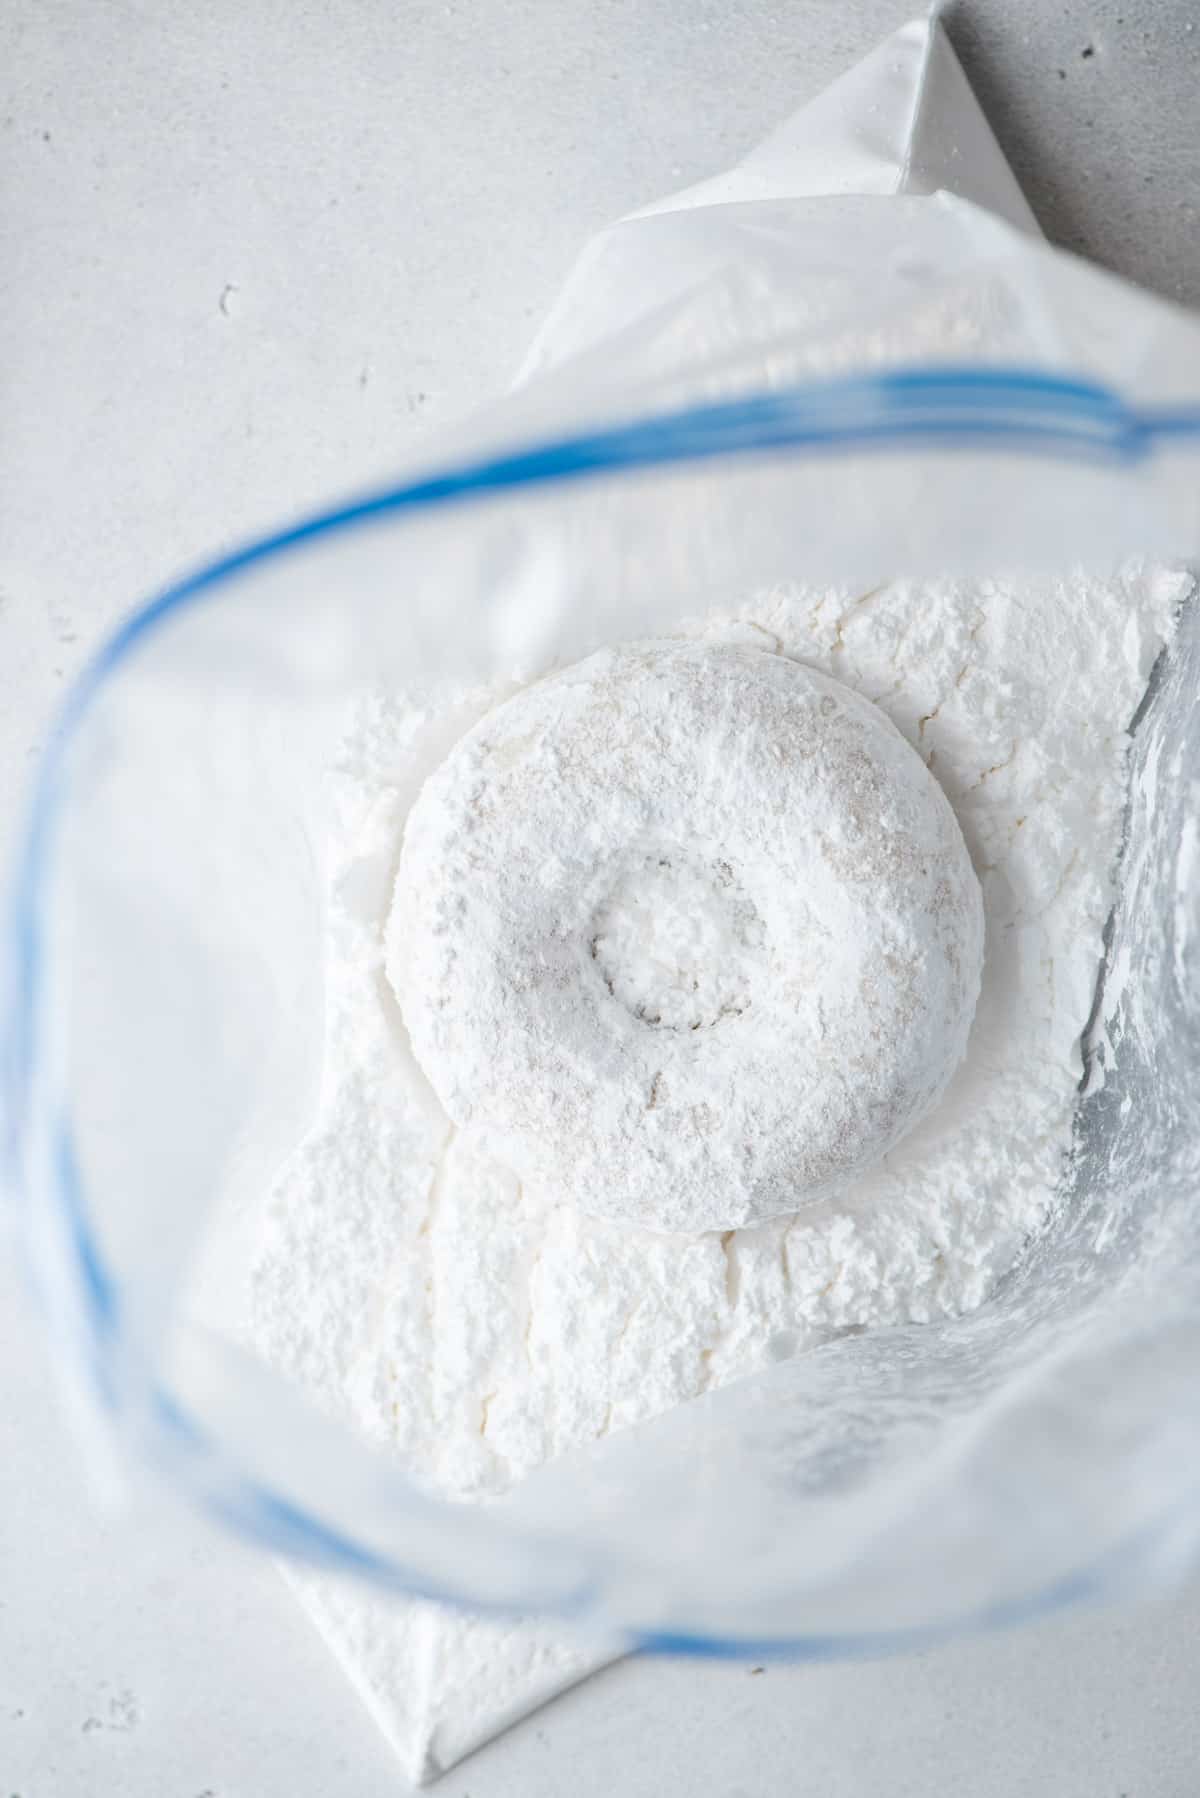 Donut in a plastic bag full of powdered sugar